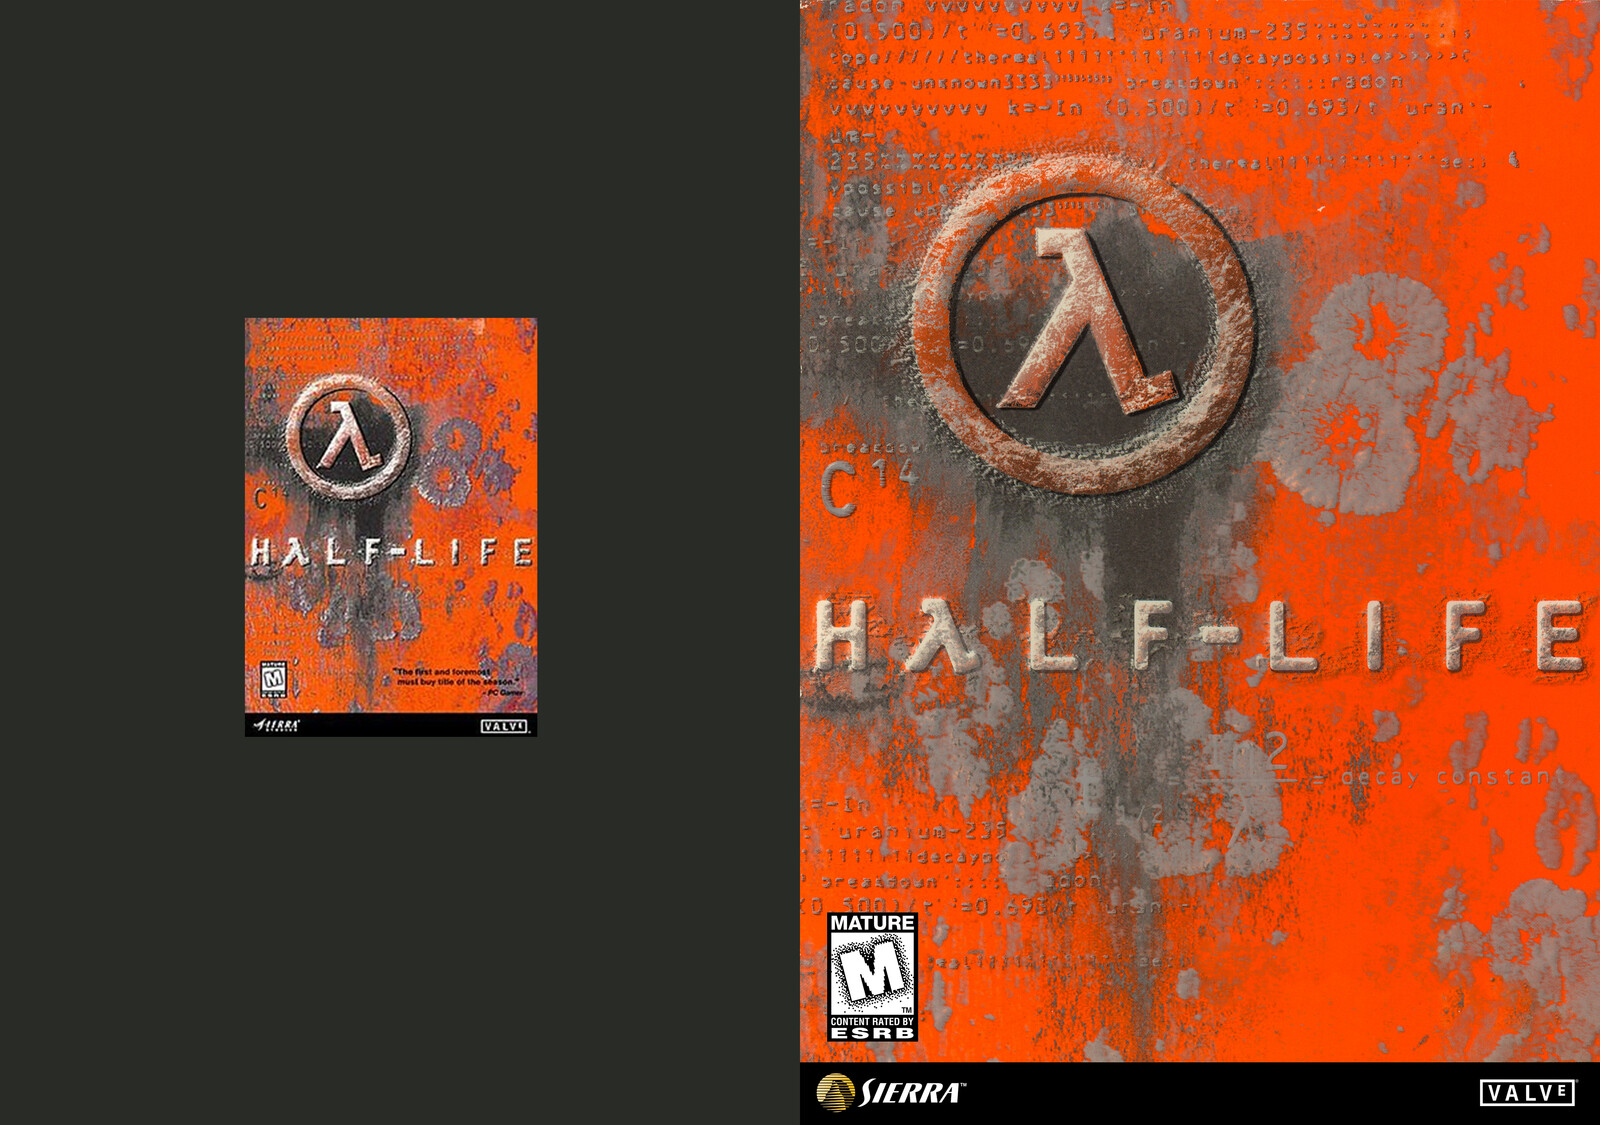 Half-Life (original scan cover vs. retouched)